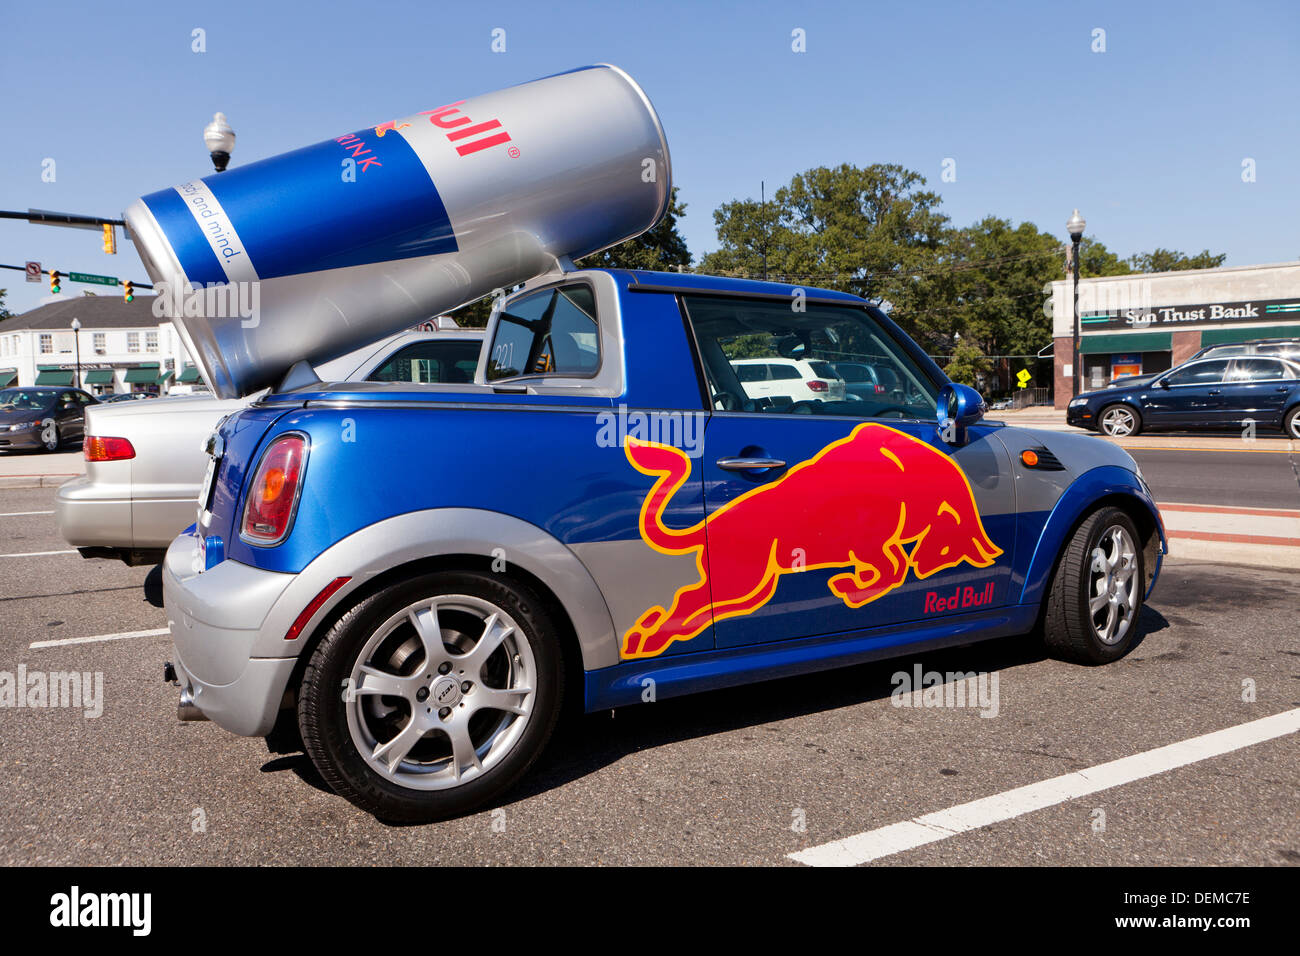 Red Bull Werbung Auto Stockfotografie - Alamy